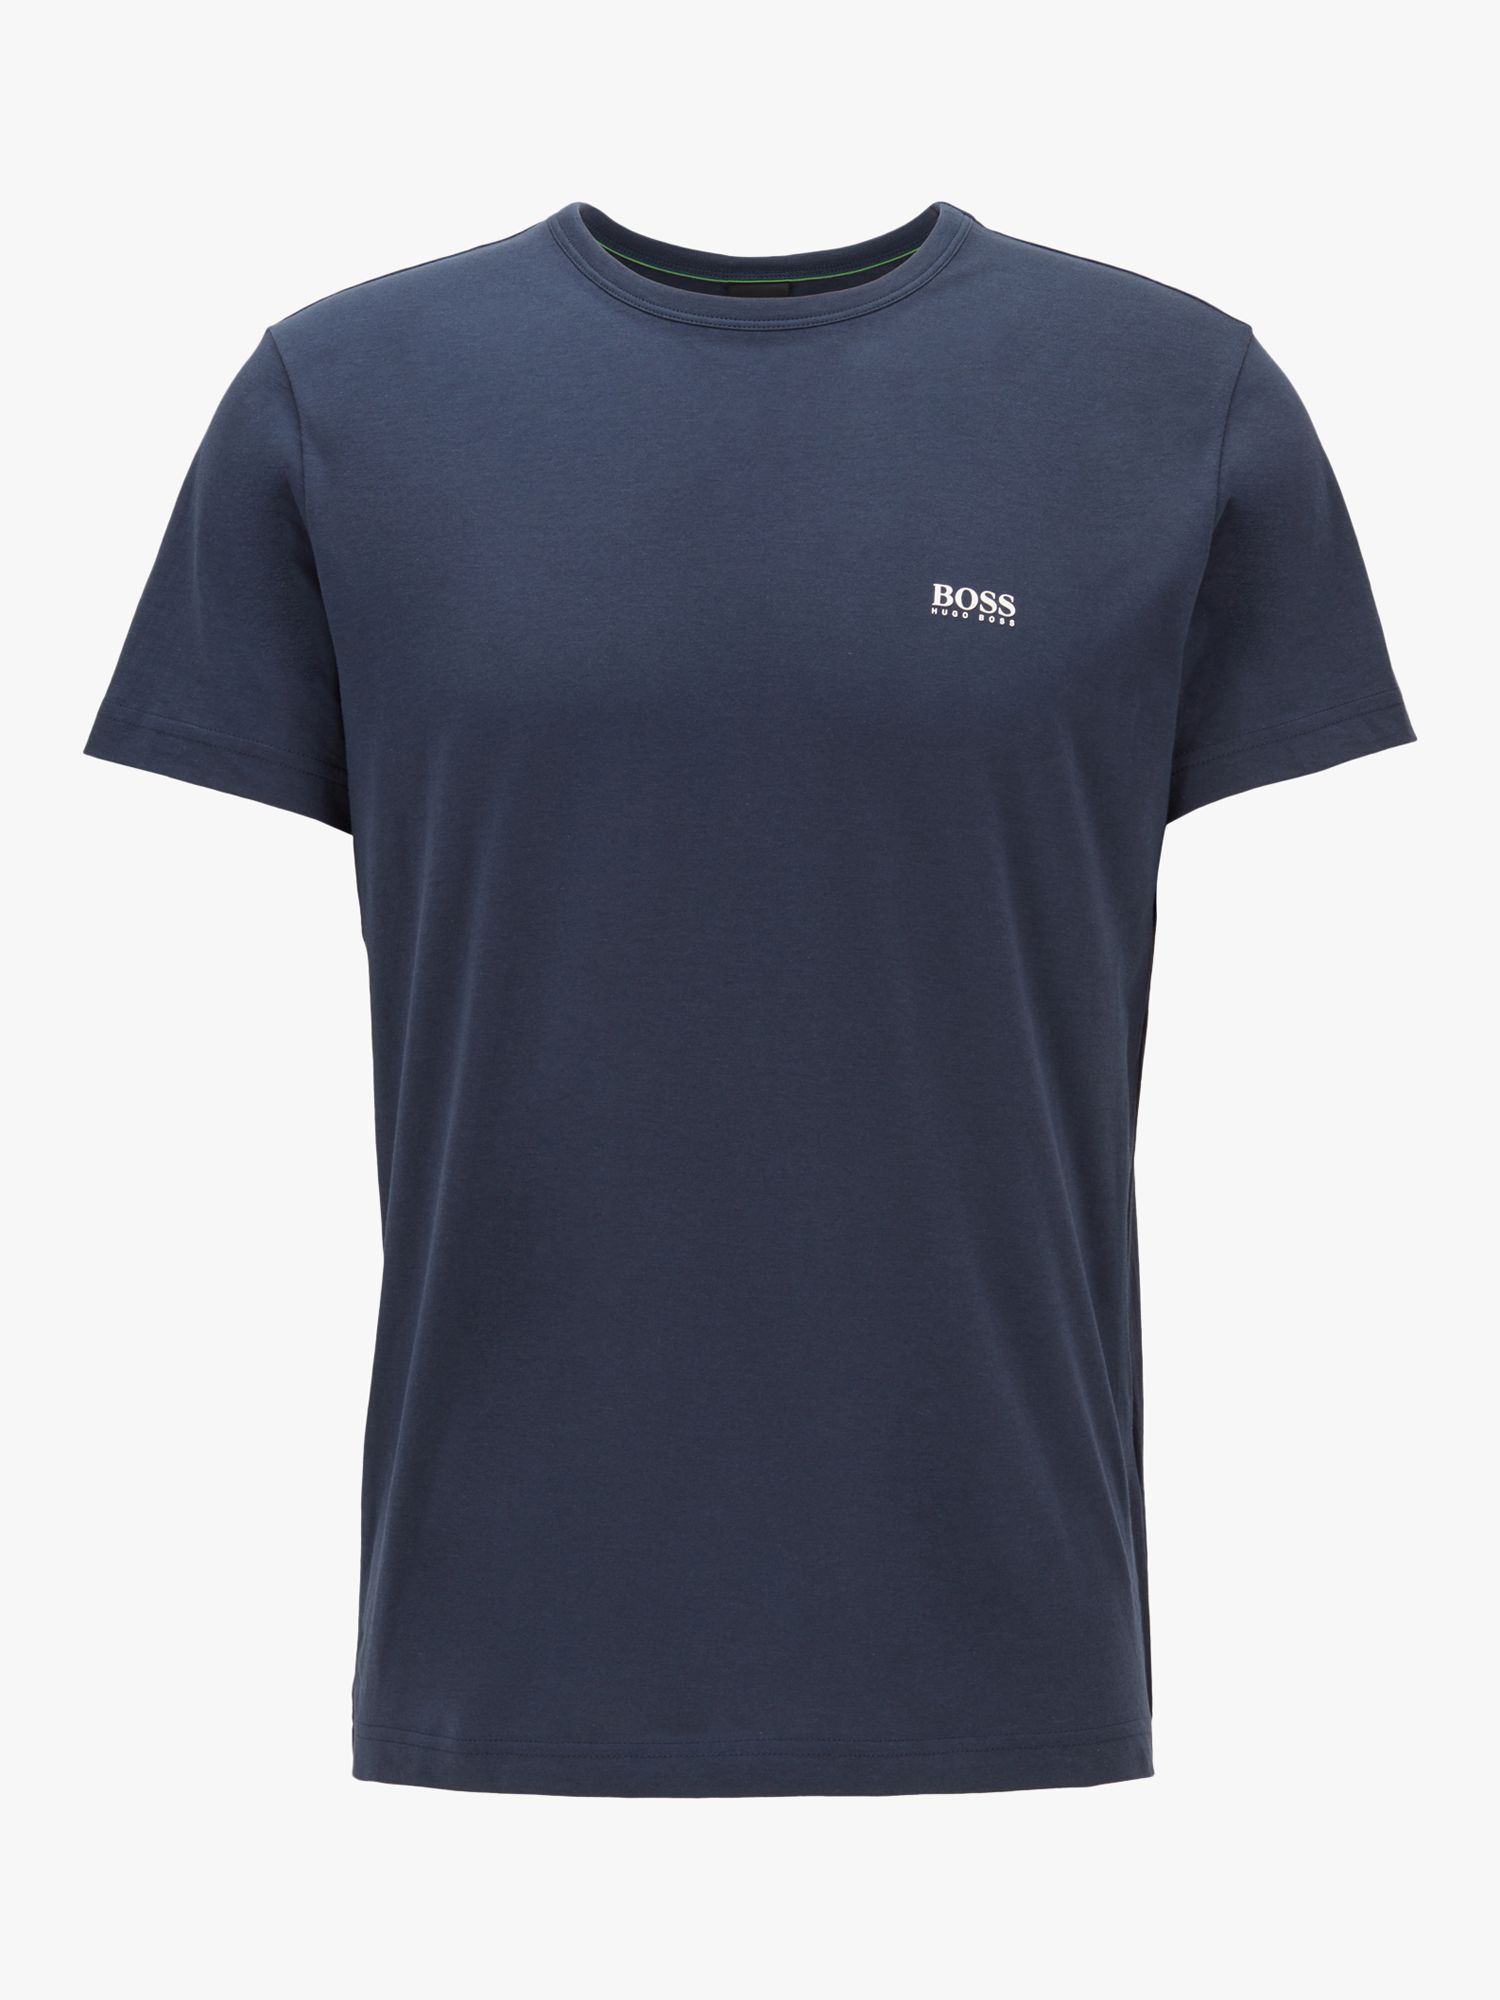 BOSS Short Sleeve Logo T-Shirt, Navy at John Lewis & Partners